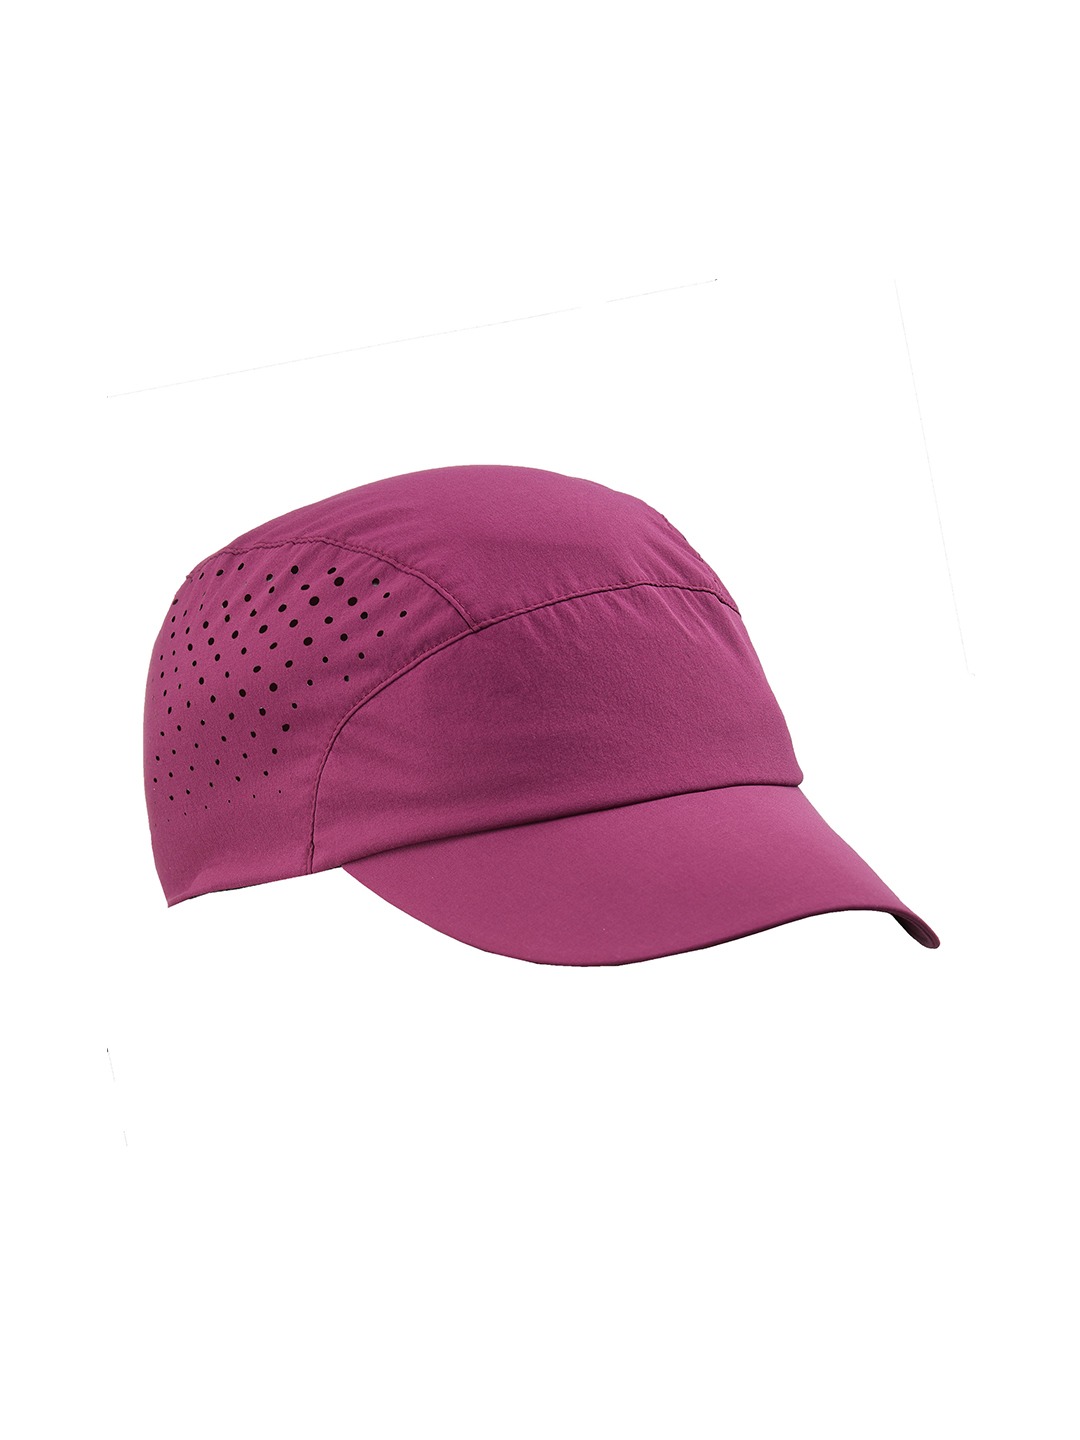 Accessories Caps | FORCLAZ By Decathlon Women Purple Solid Trekking Visor Cap with Cut-Out Detail - ZE08810